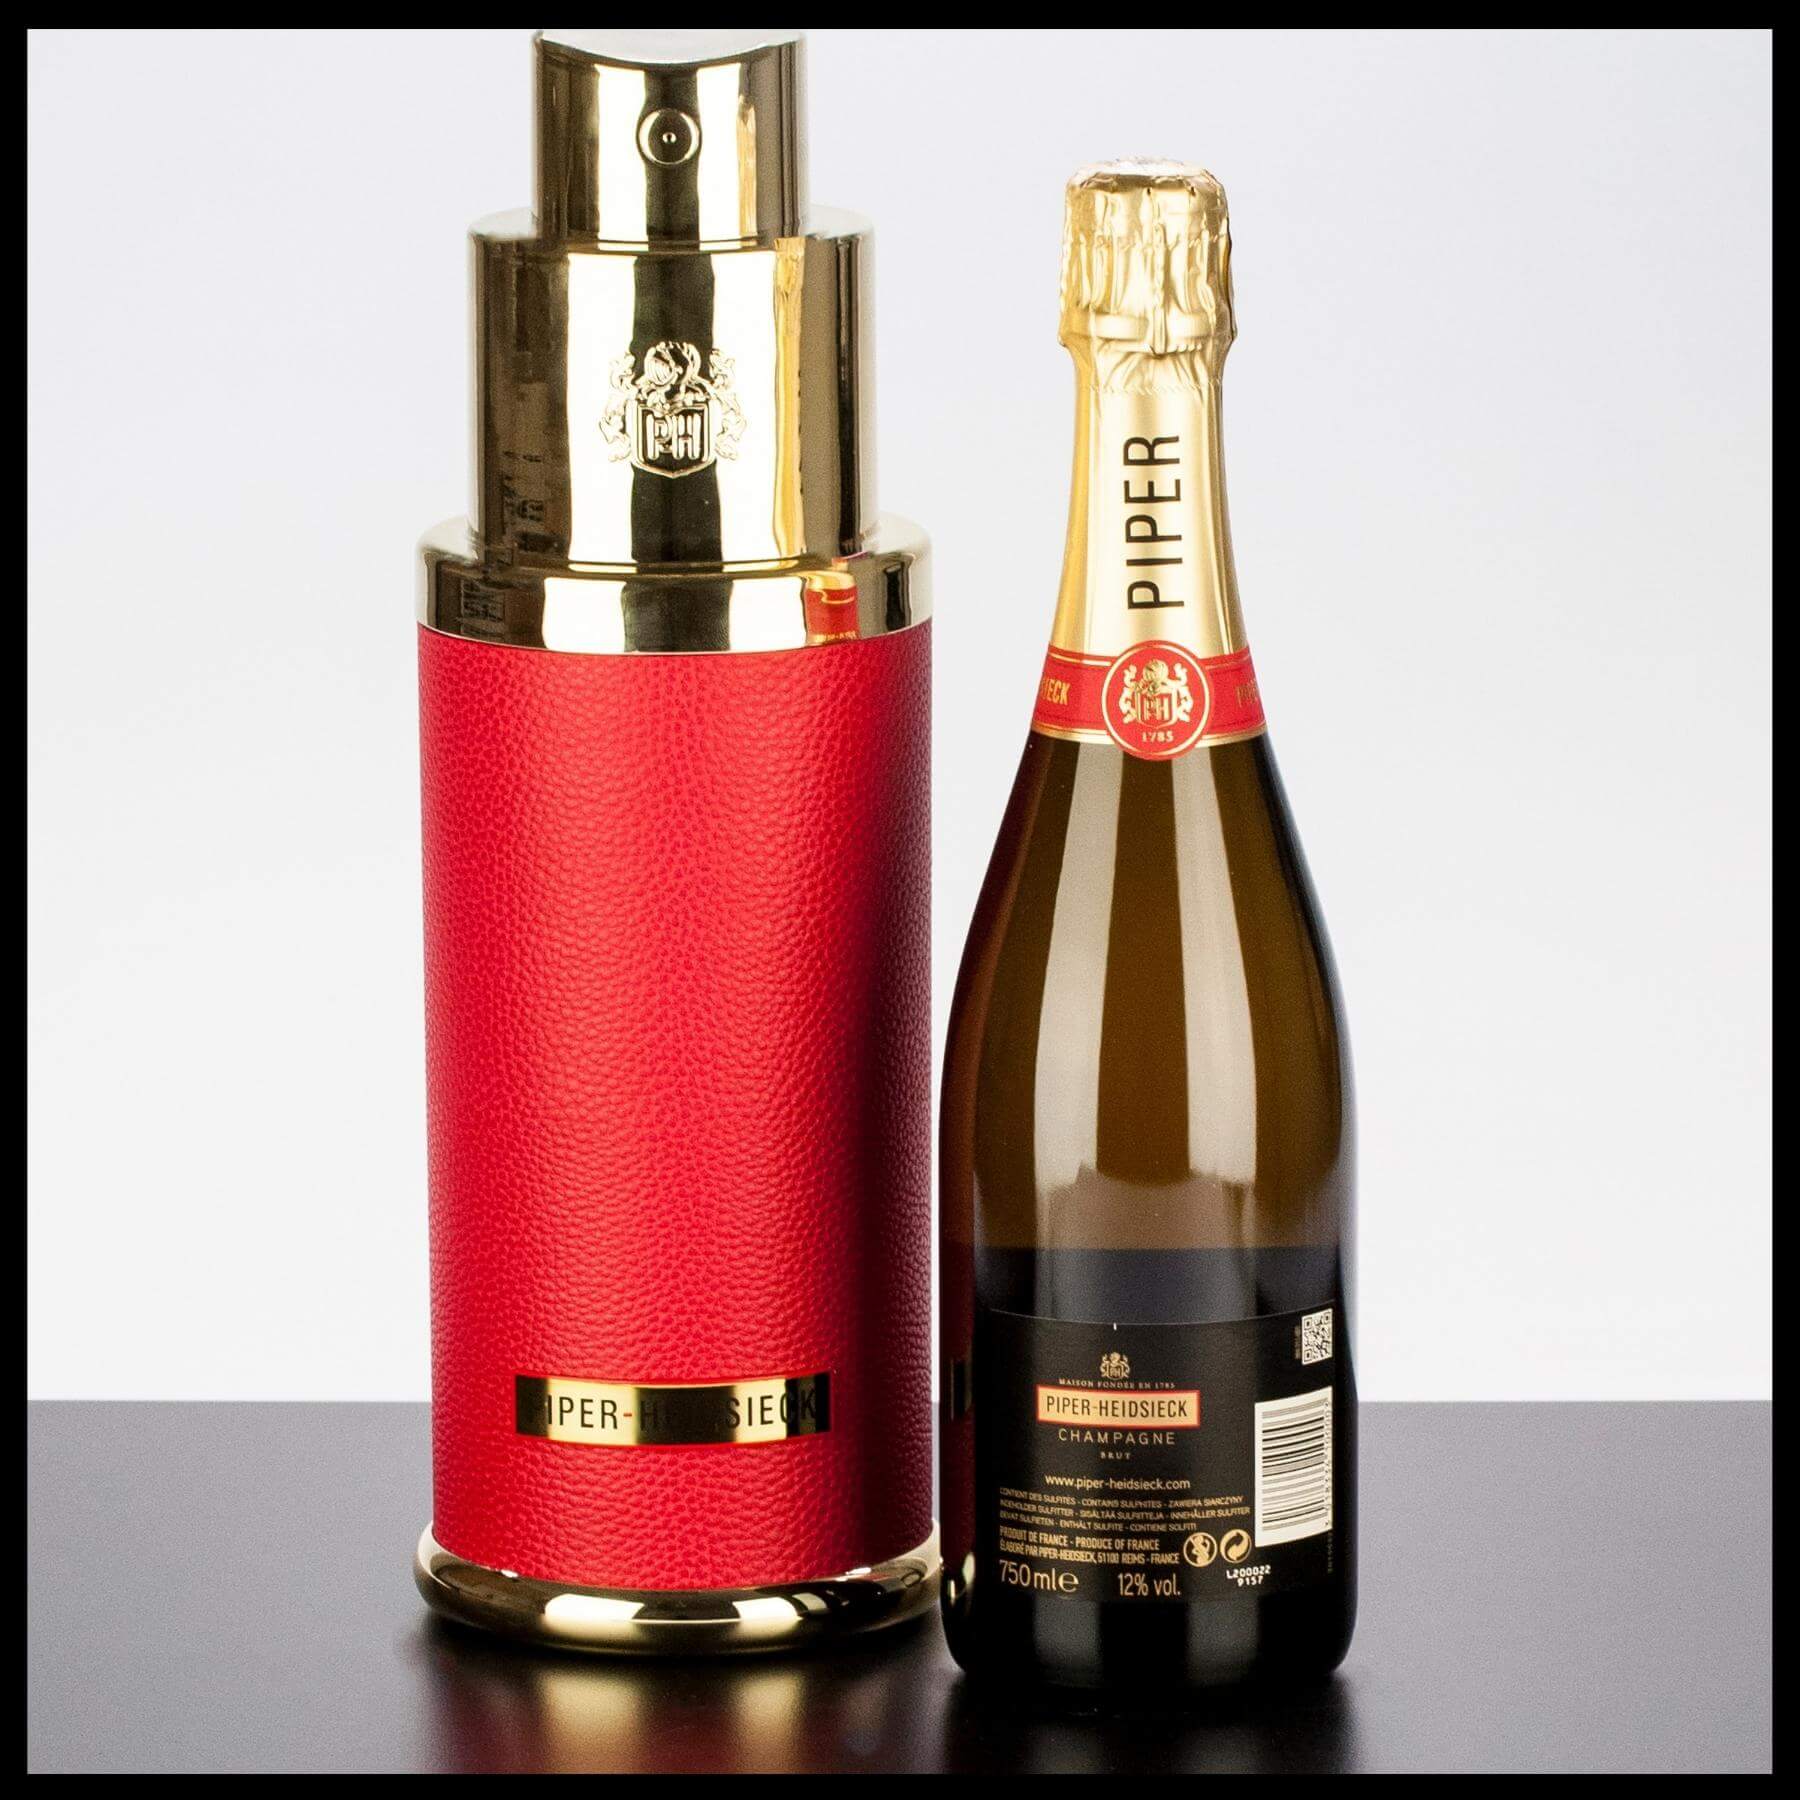 Piper-Heidsieck Champagner Cuvée Brut Perfume Edition 0,75L - 12% Vol. - Trinklusiv